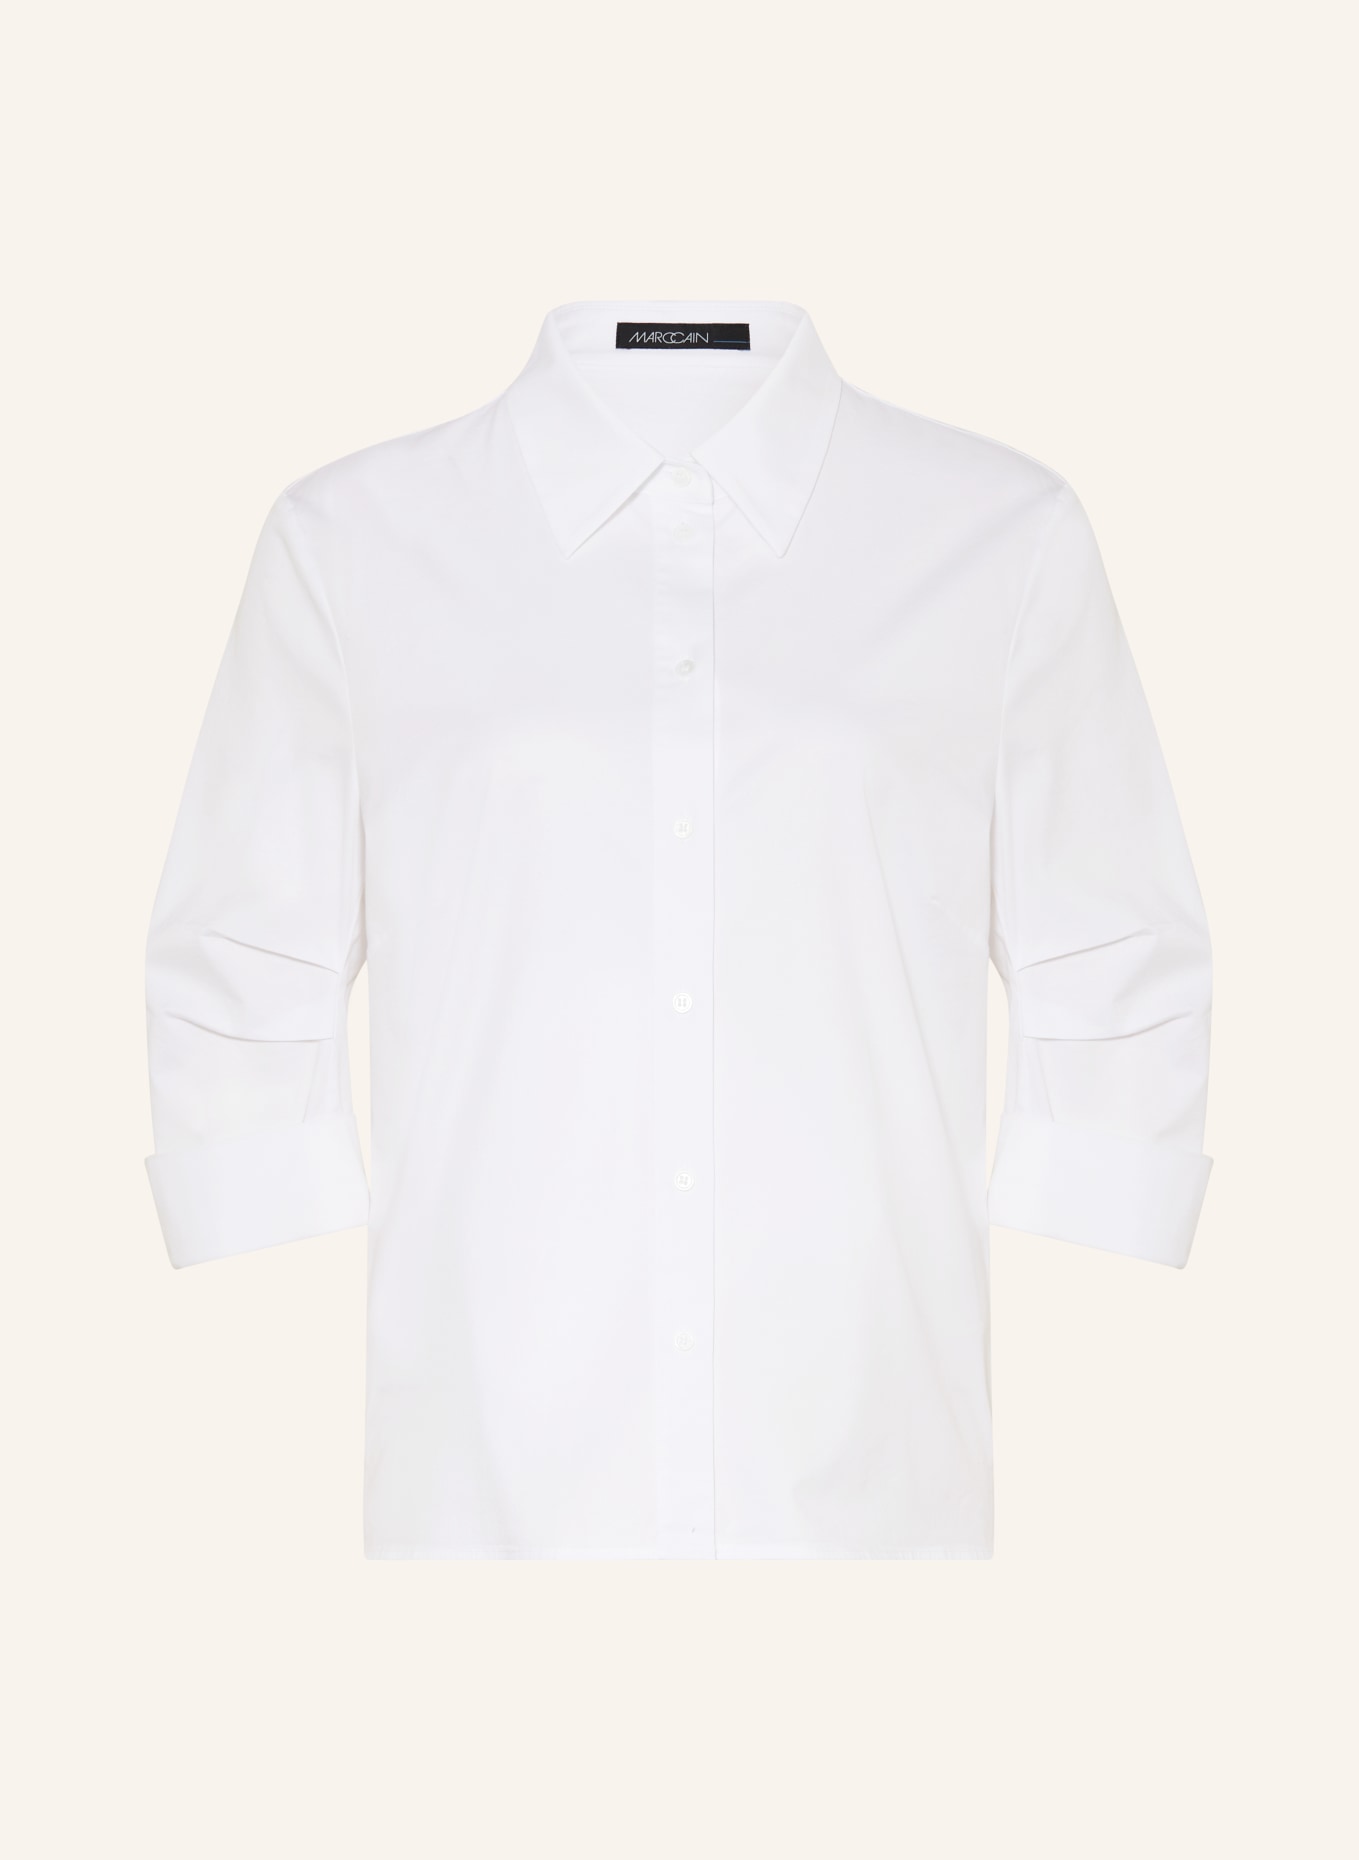 MARC CAIN Hemdbluse mit 3/4-Arm, Farbe: 100 WHITE (Bild 1)